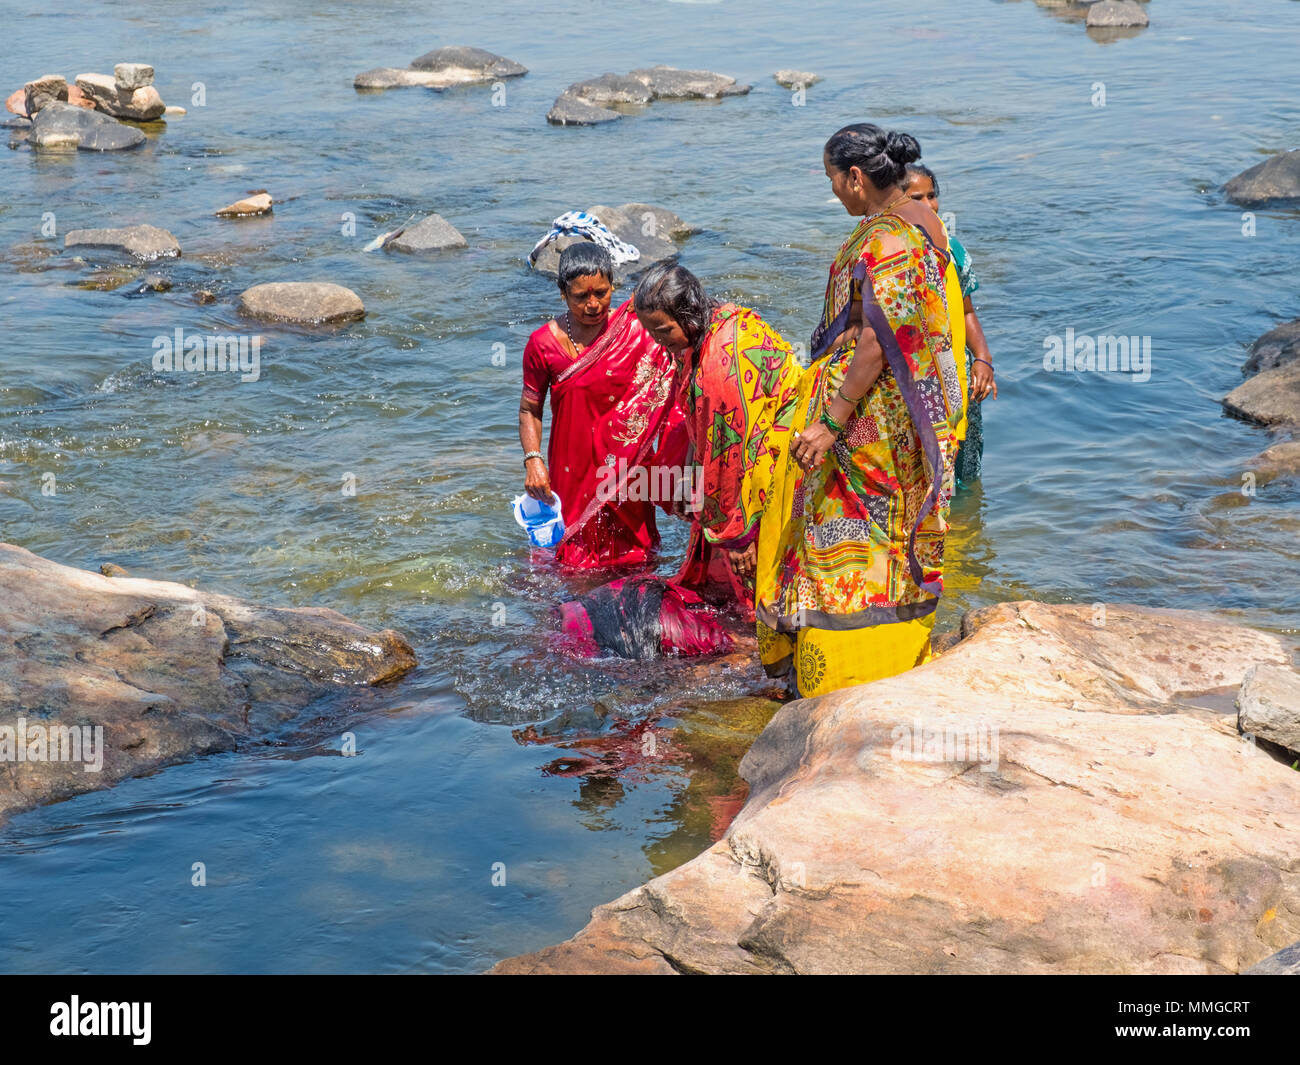 Shrirangapattan, India - March 2, 2018: Hindu pilgrims performing a cleansing ritual in the sacred river Kaveri Stock Photo